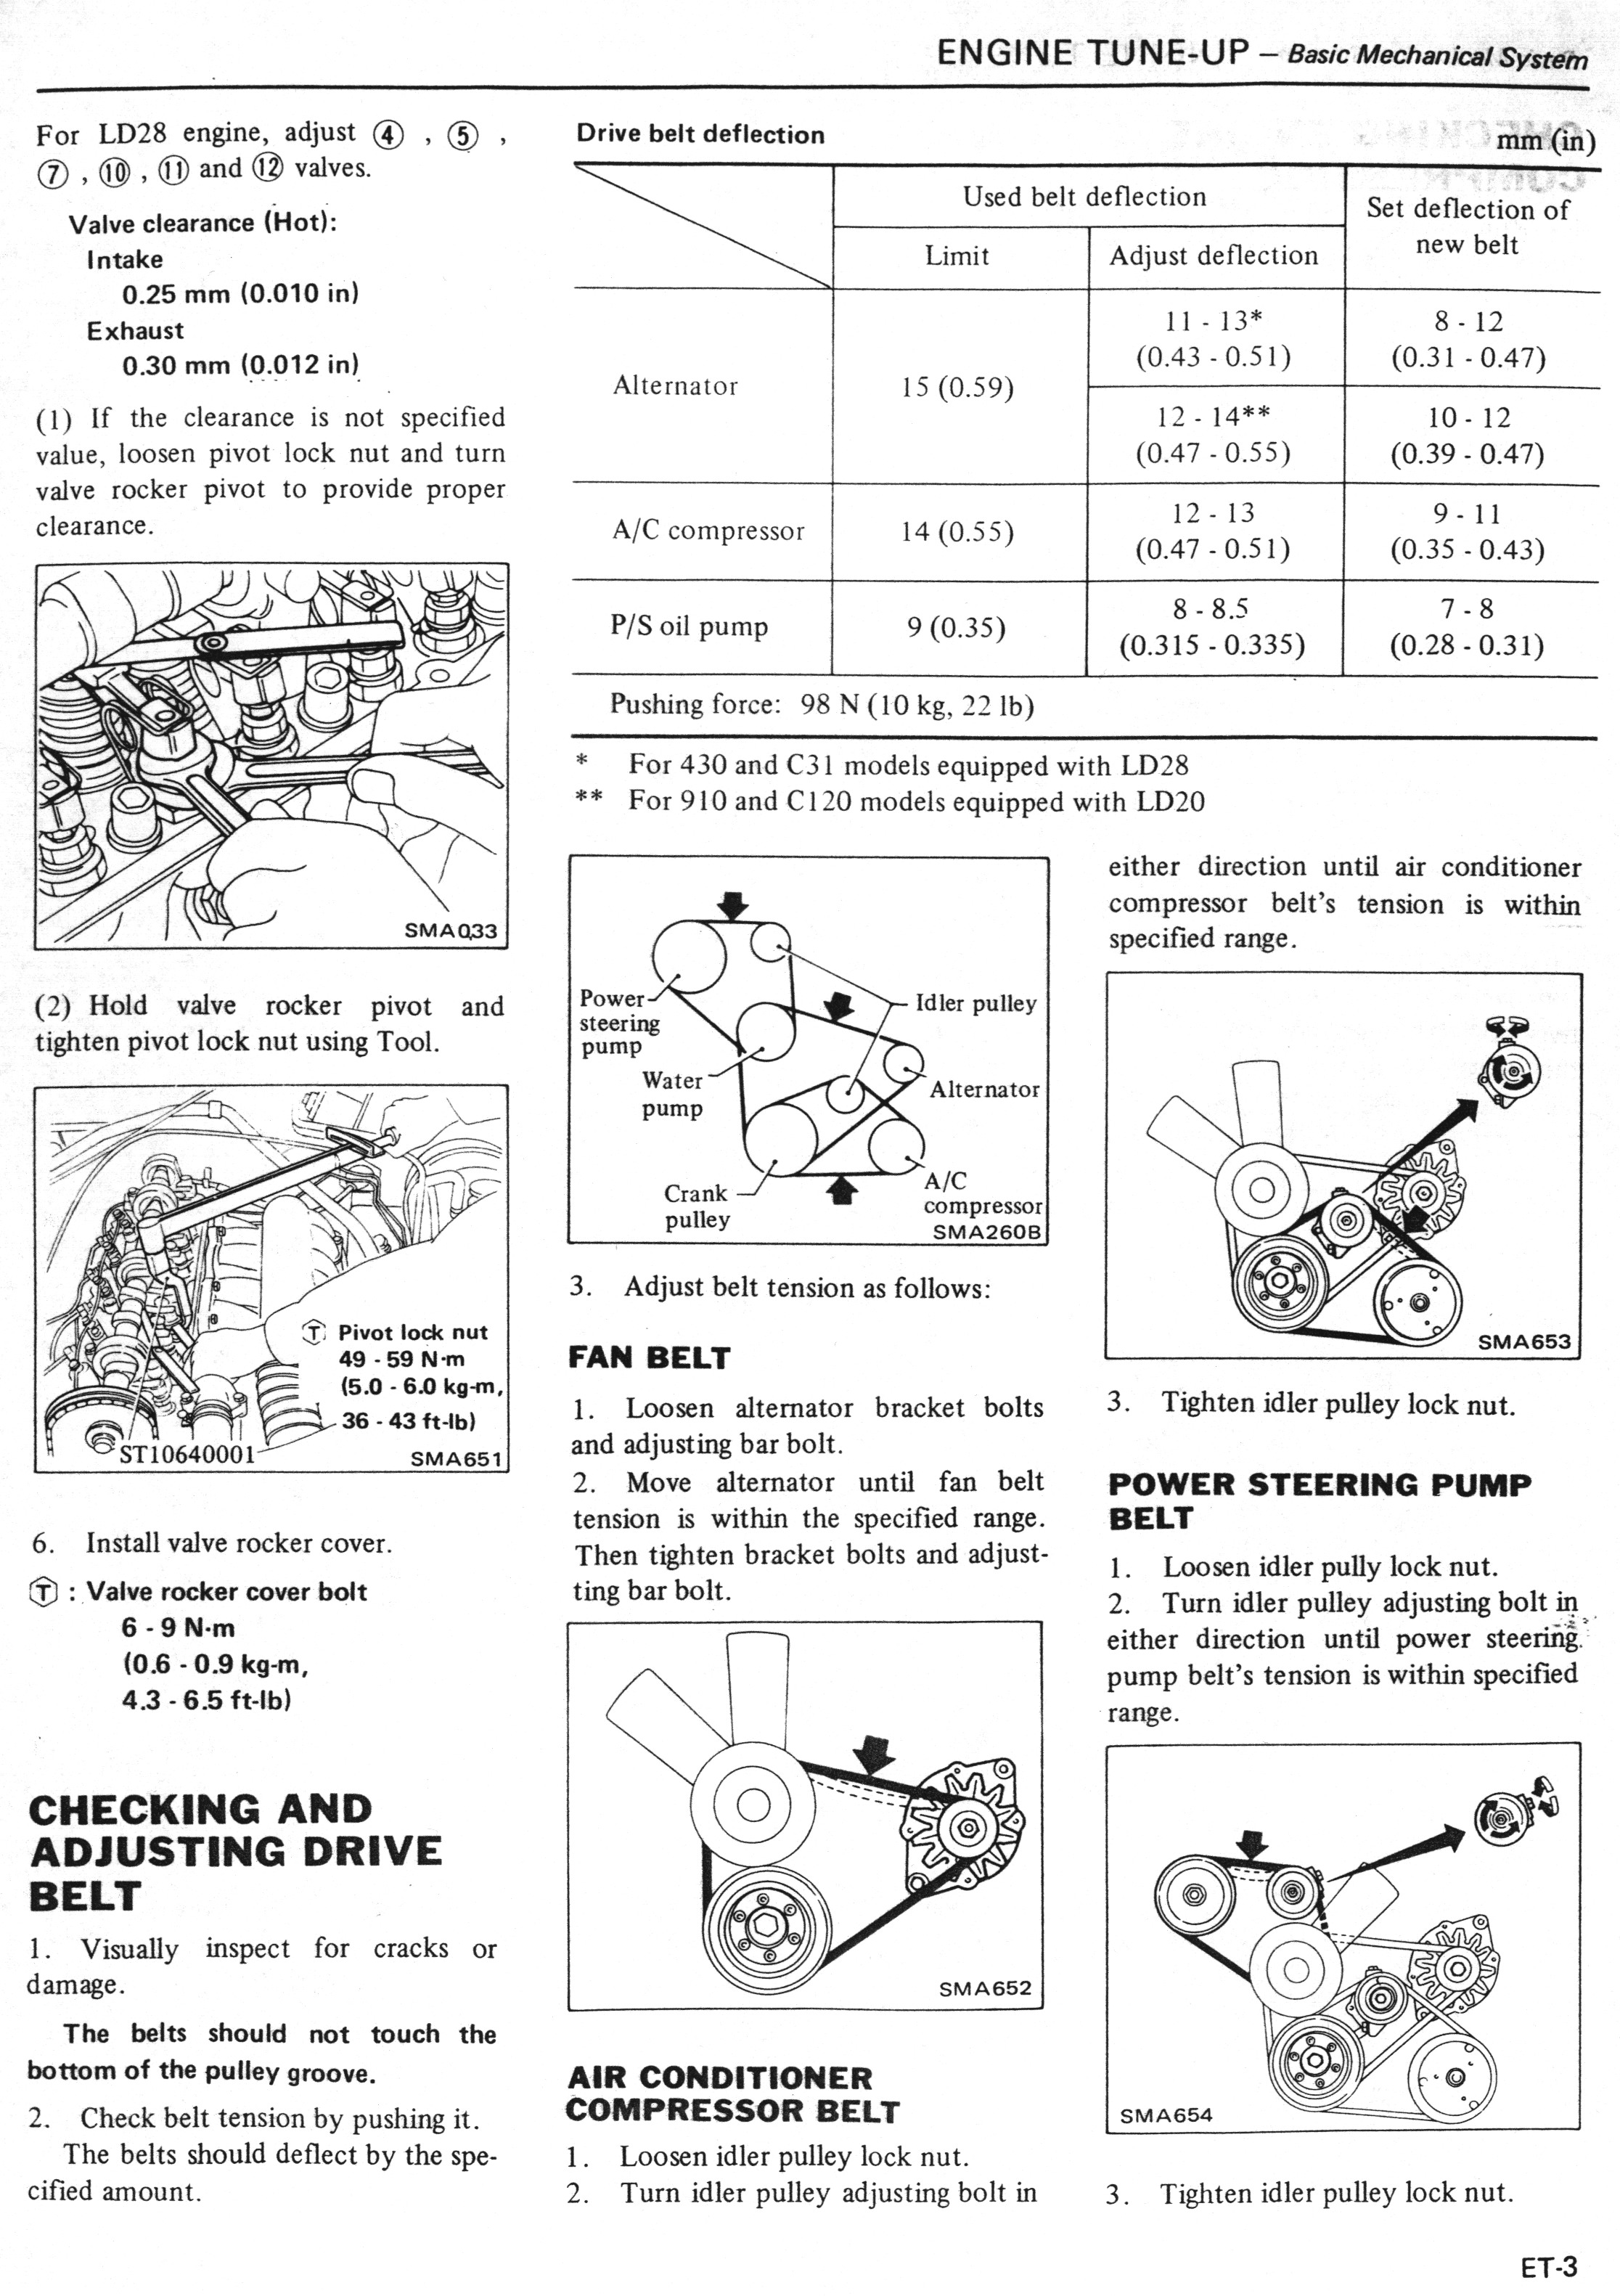 manual de motor nissan ld28